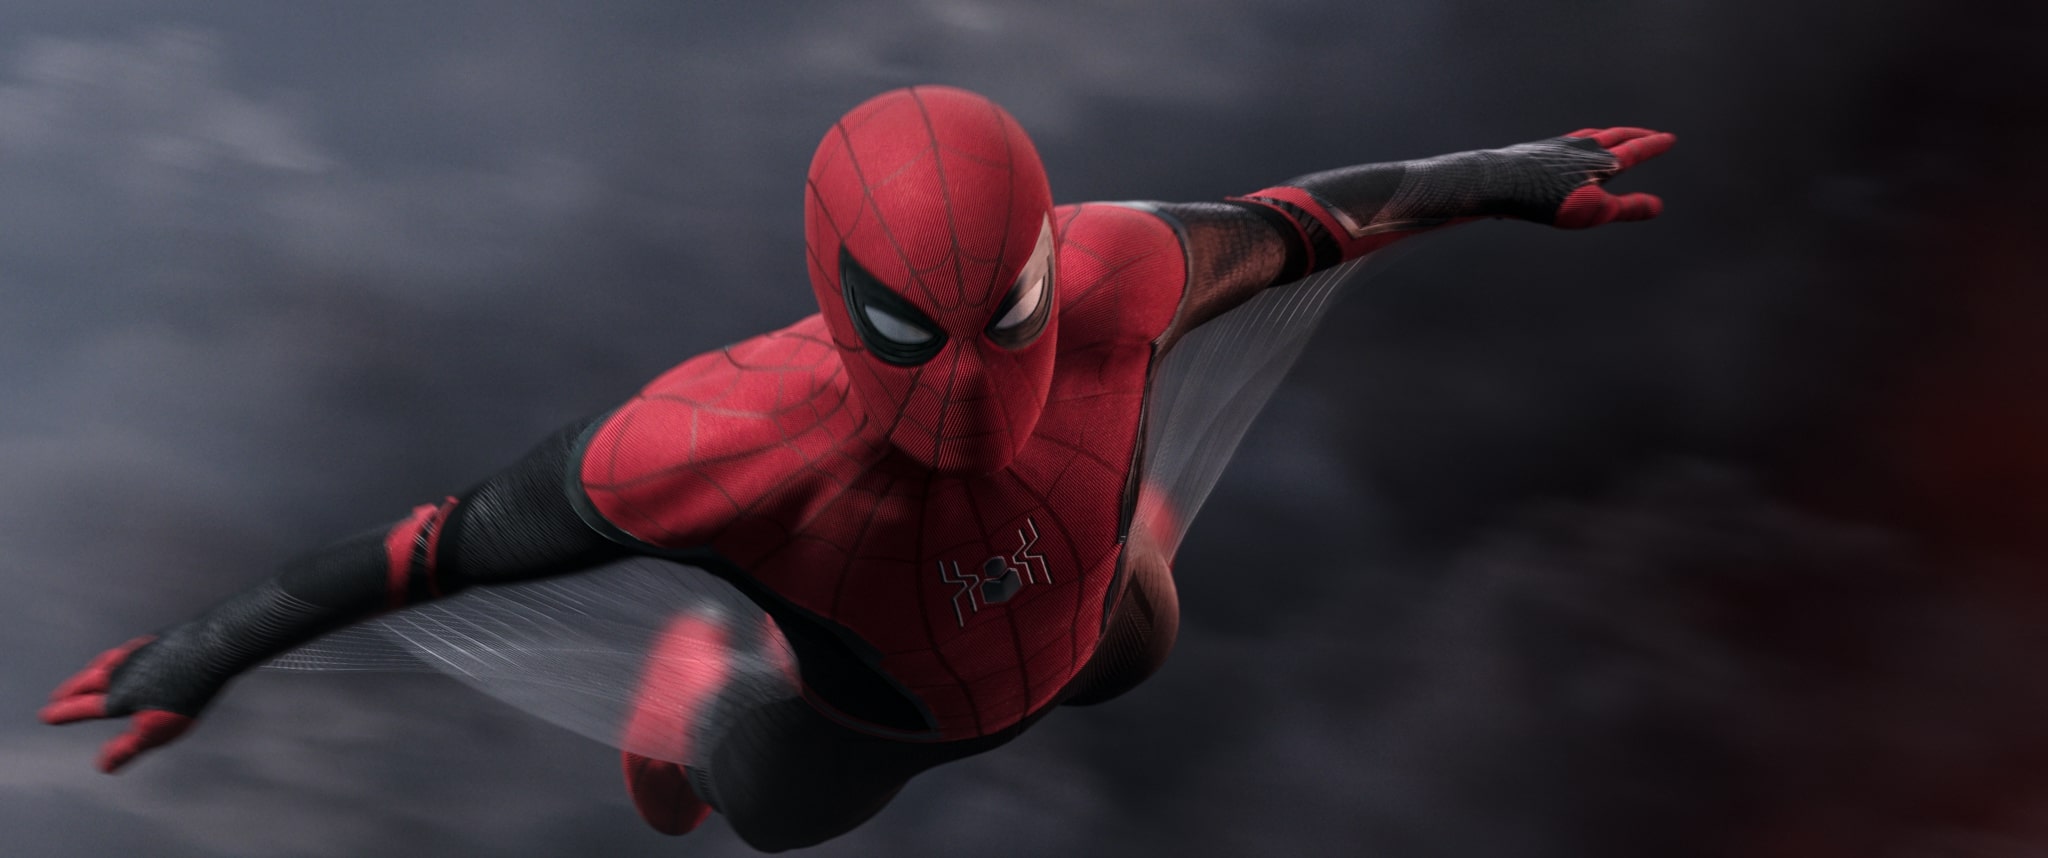 Nuova immagine di Spider-Man: Far From Home thumbnail